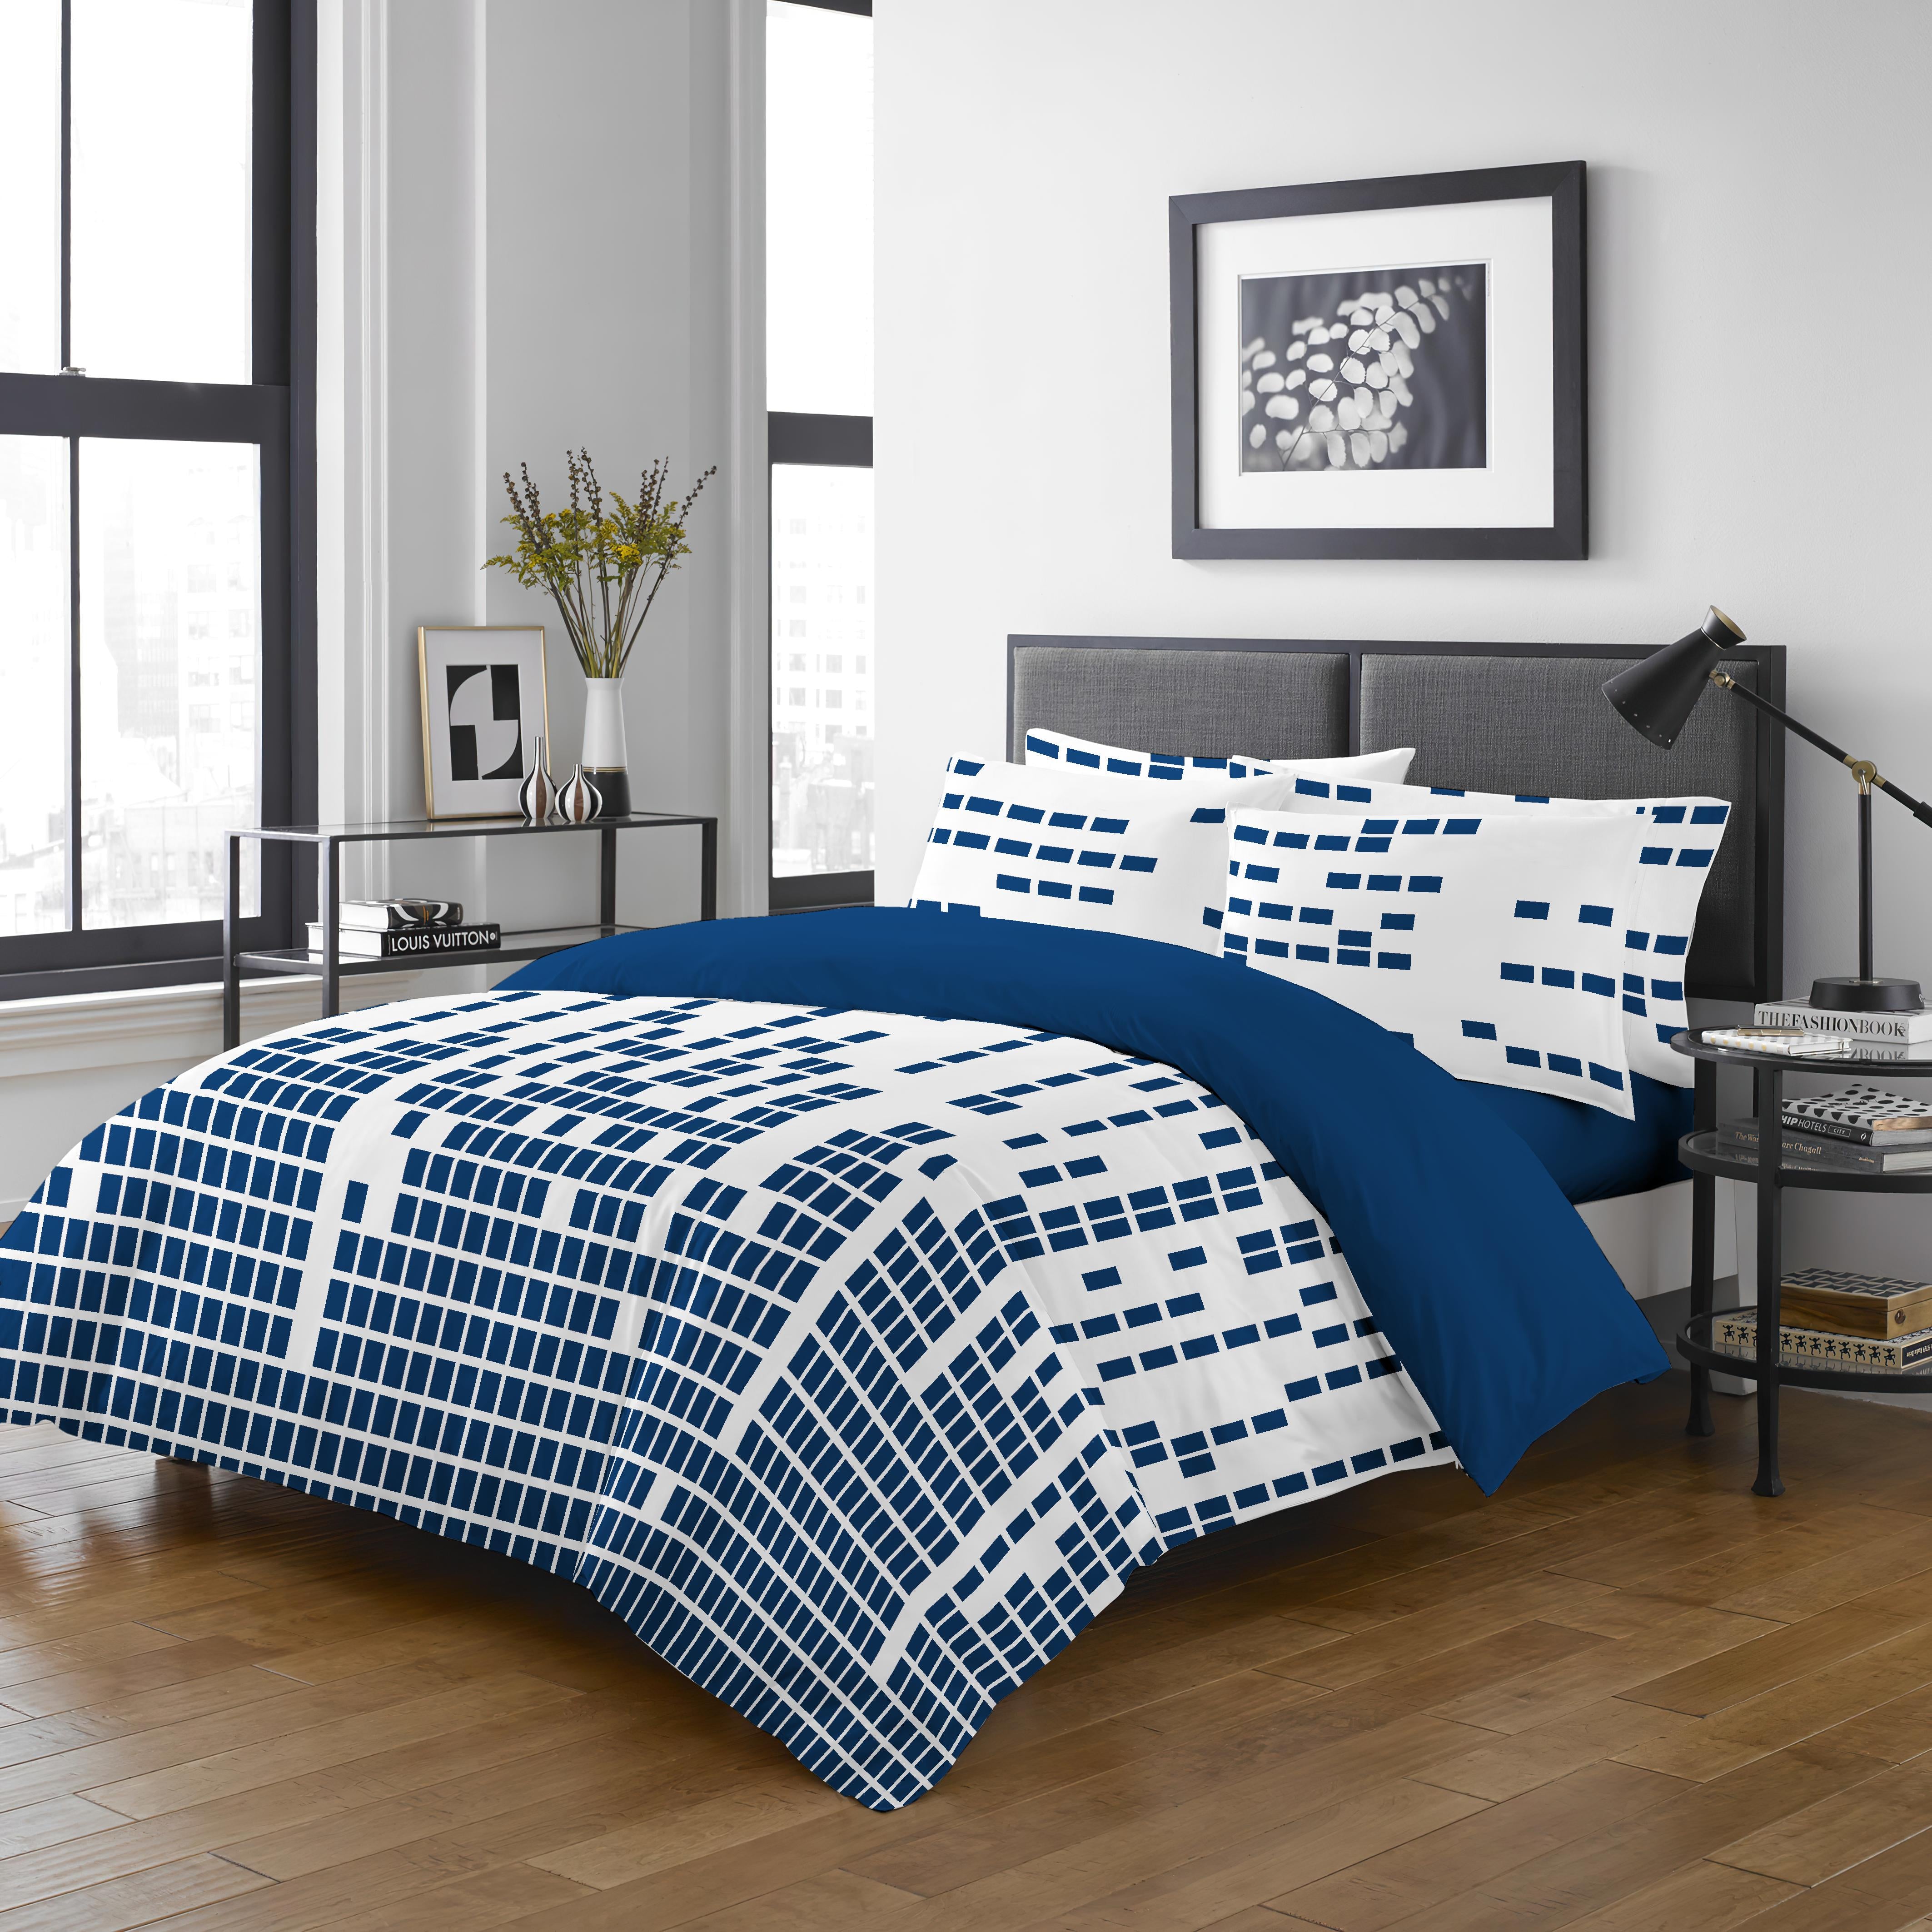 Comforter sets gray and black full louis vuitton bedding set